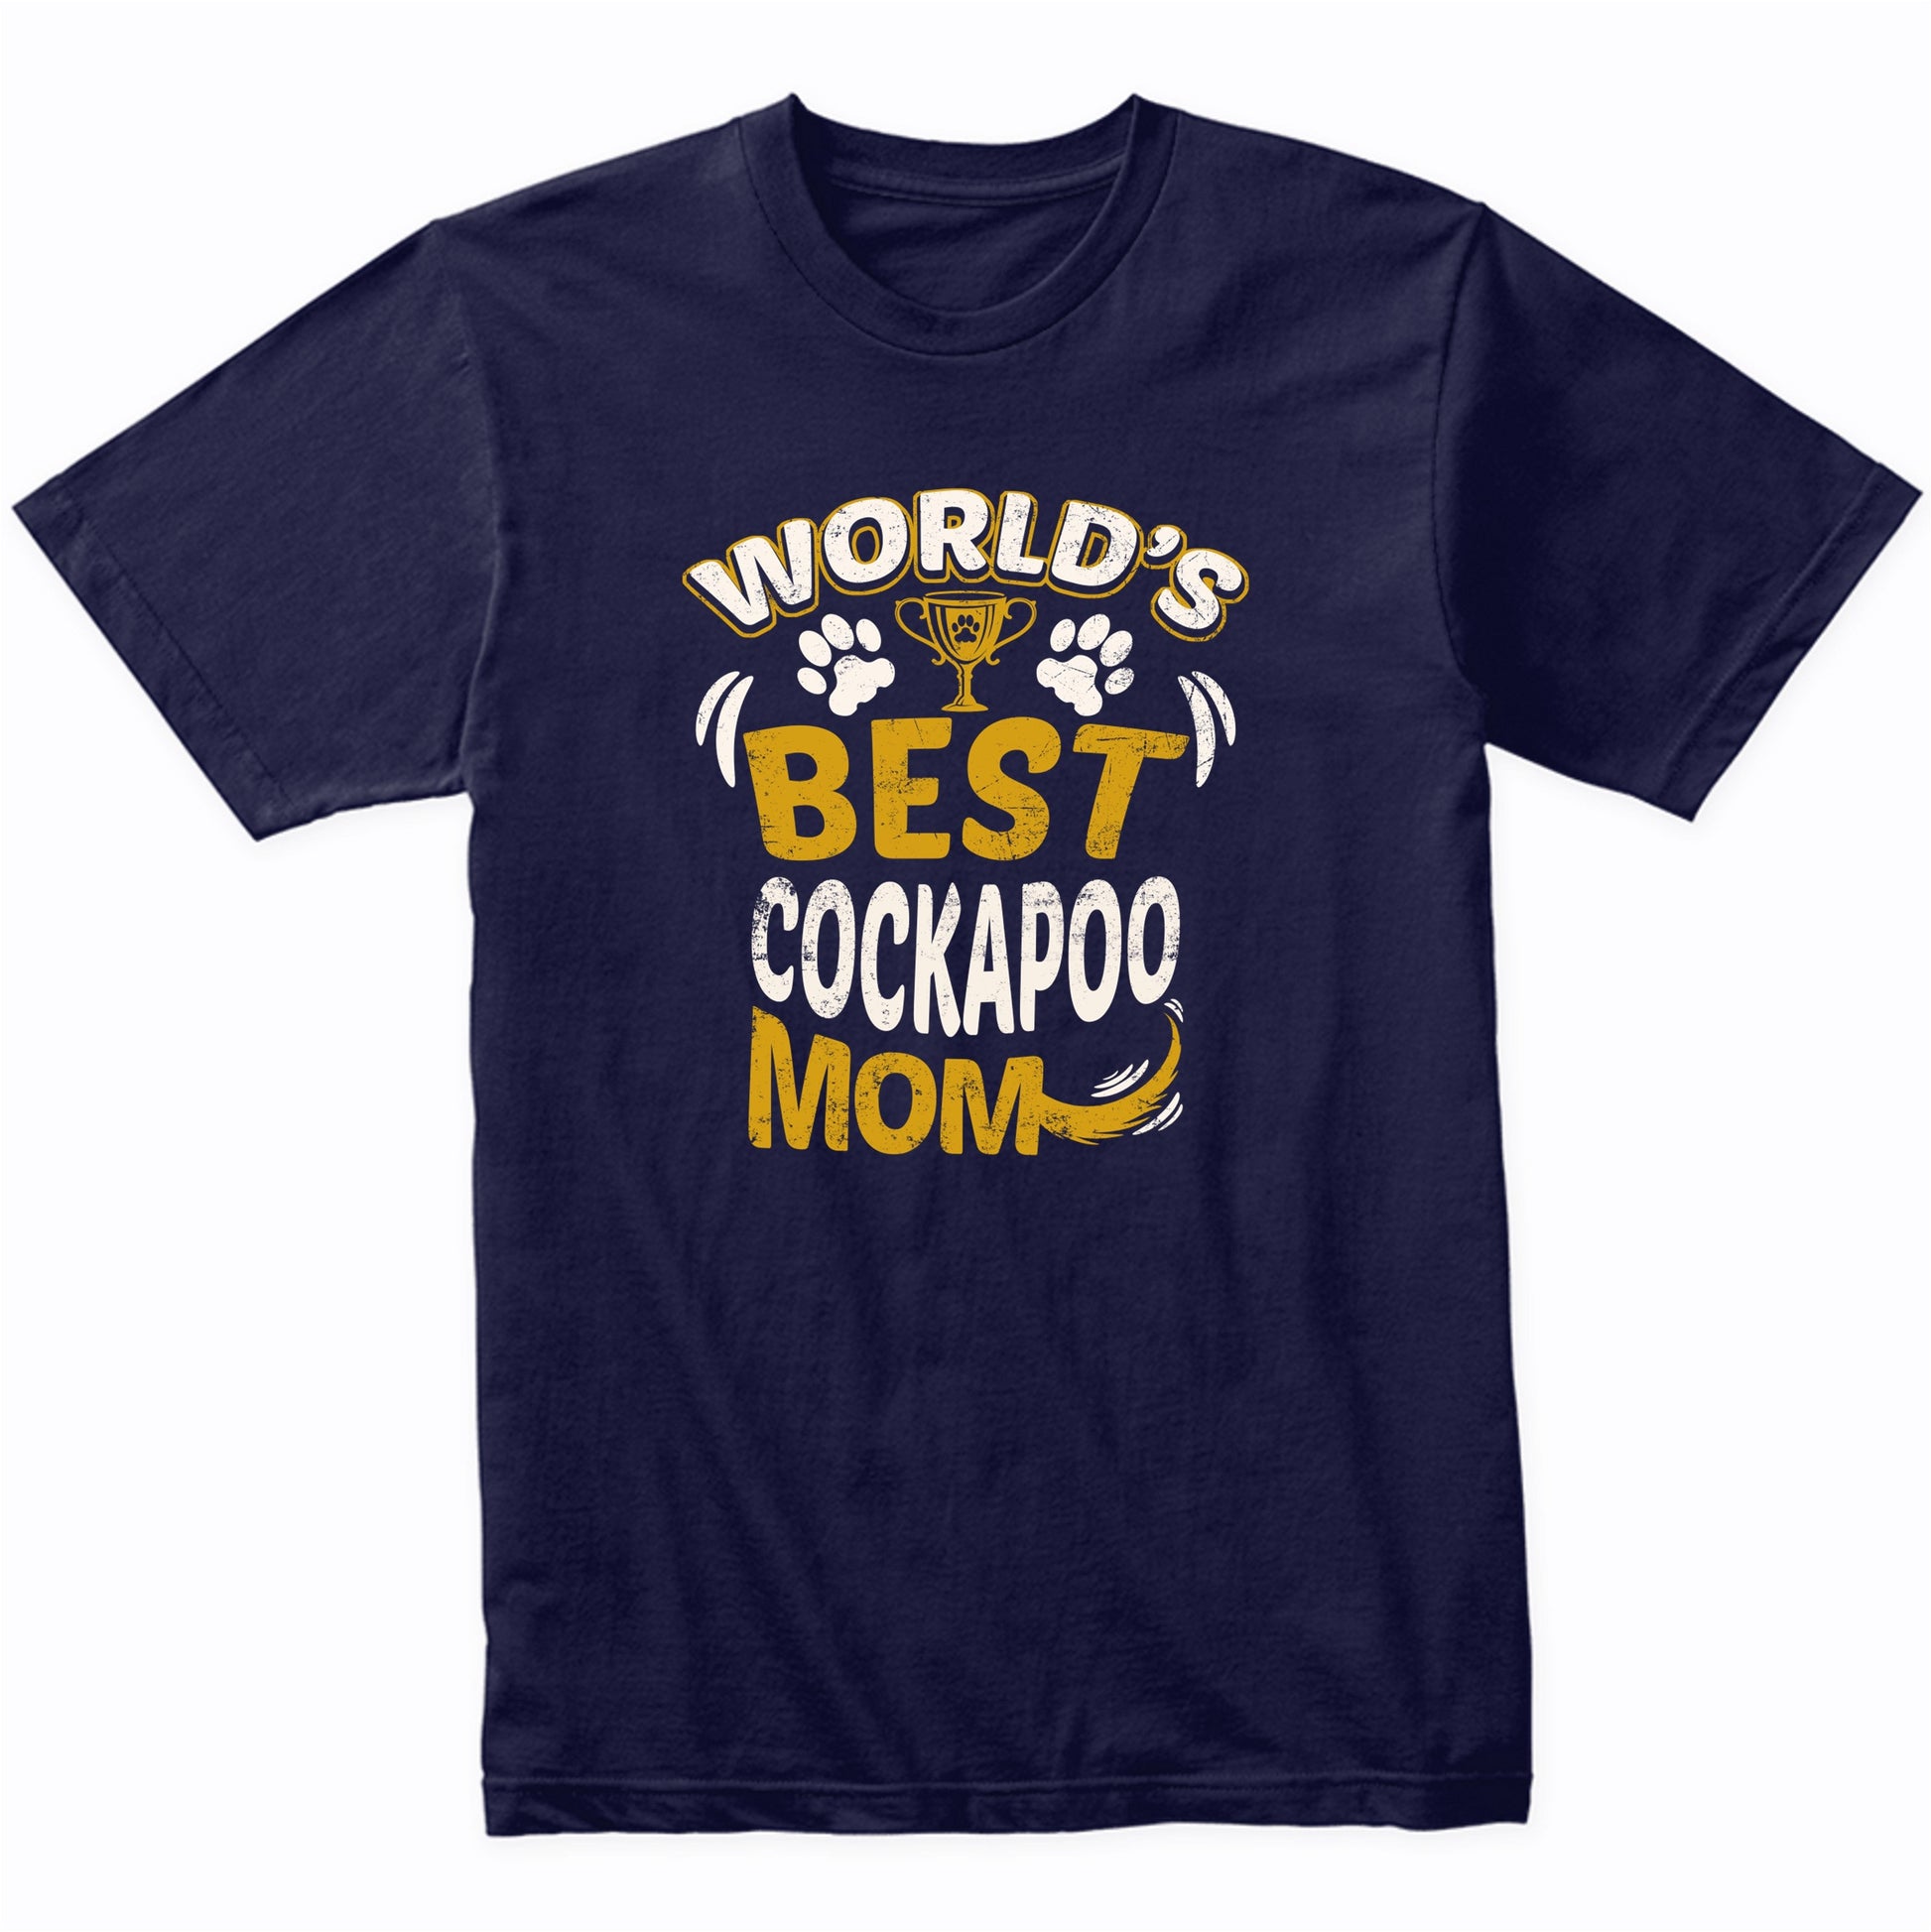 World's Best Cockapoo Mom Graphic T-Shirt